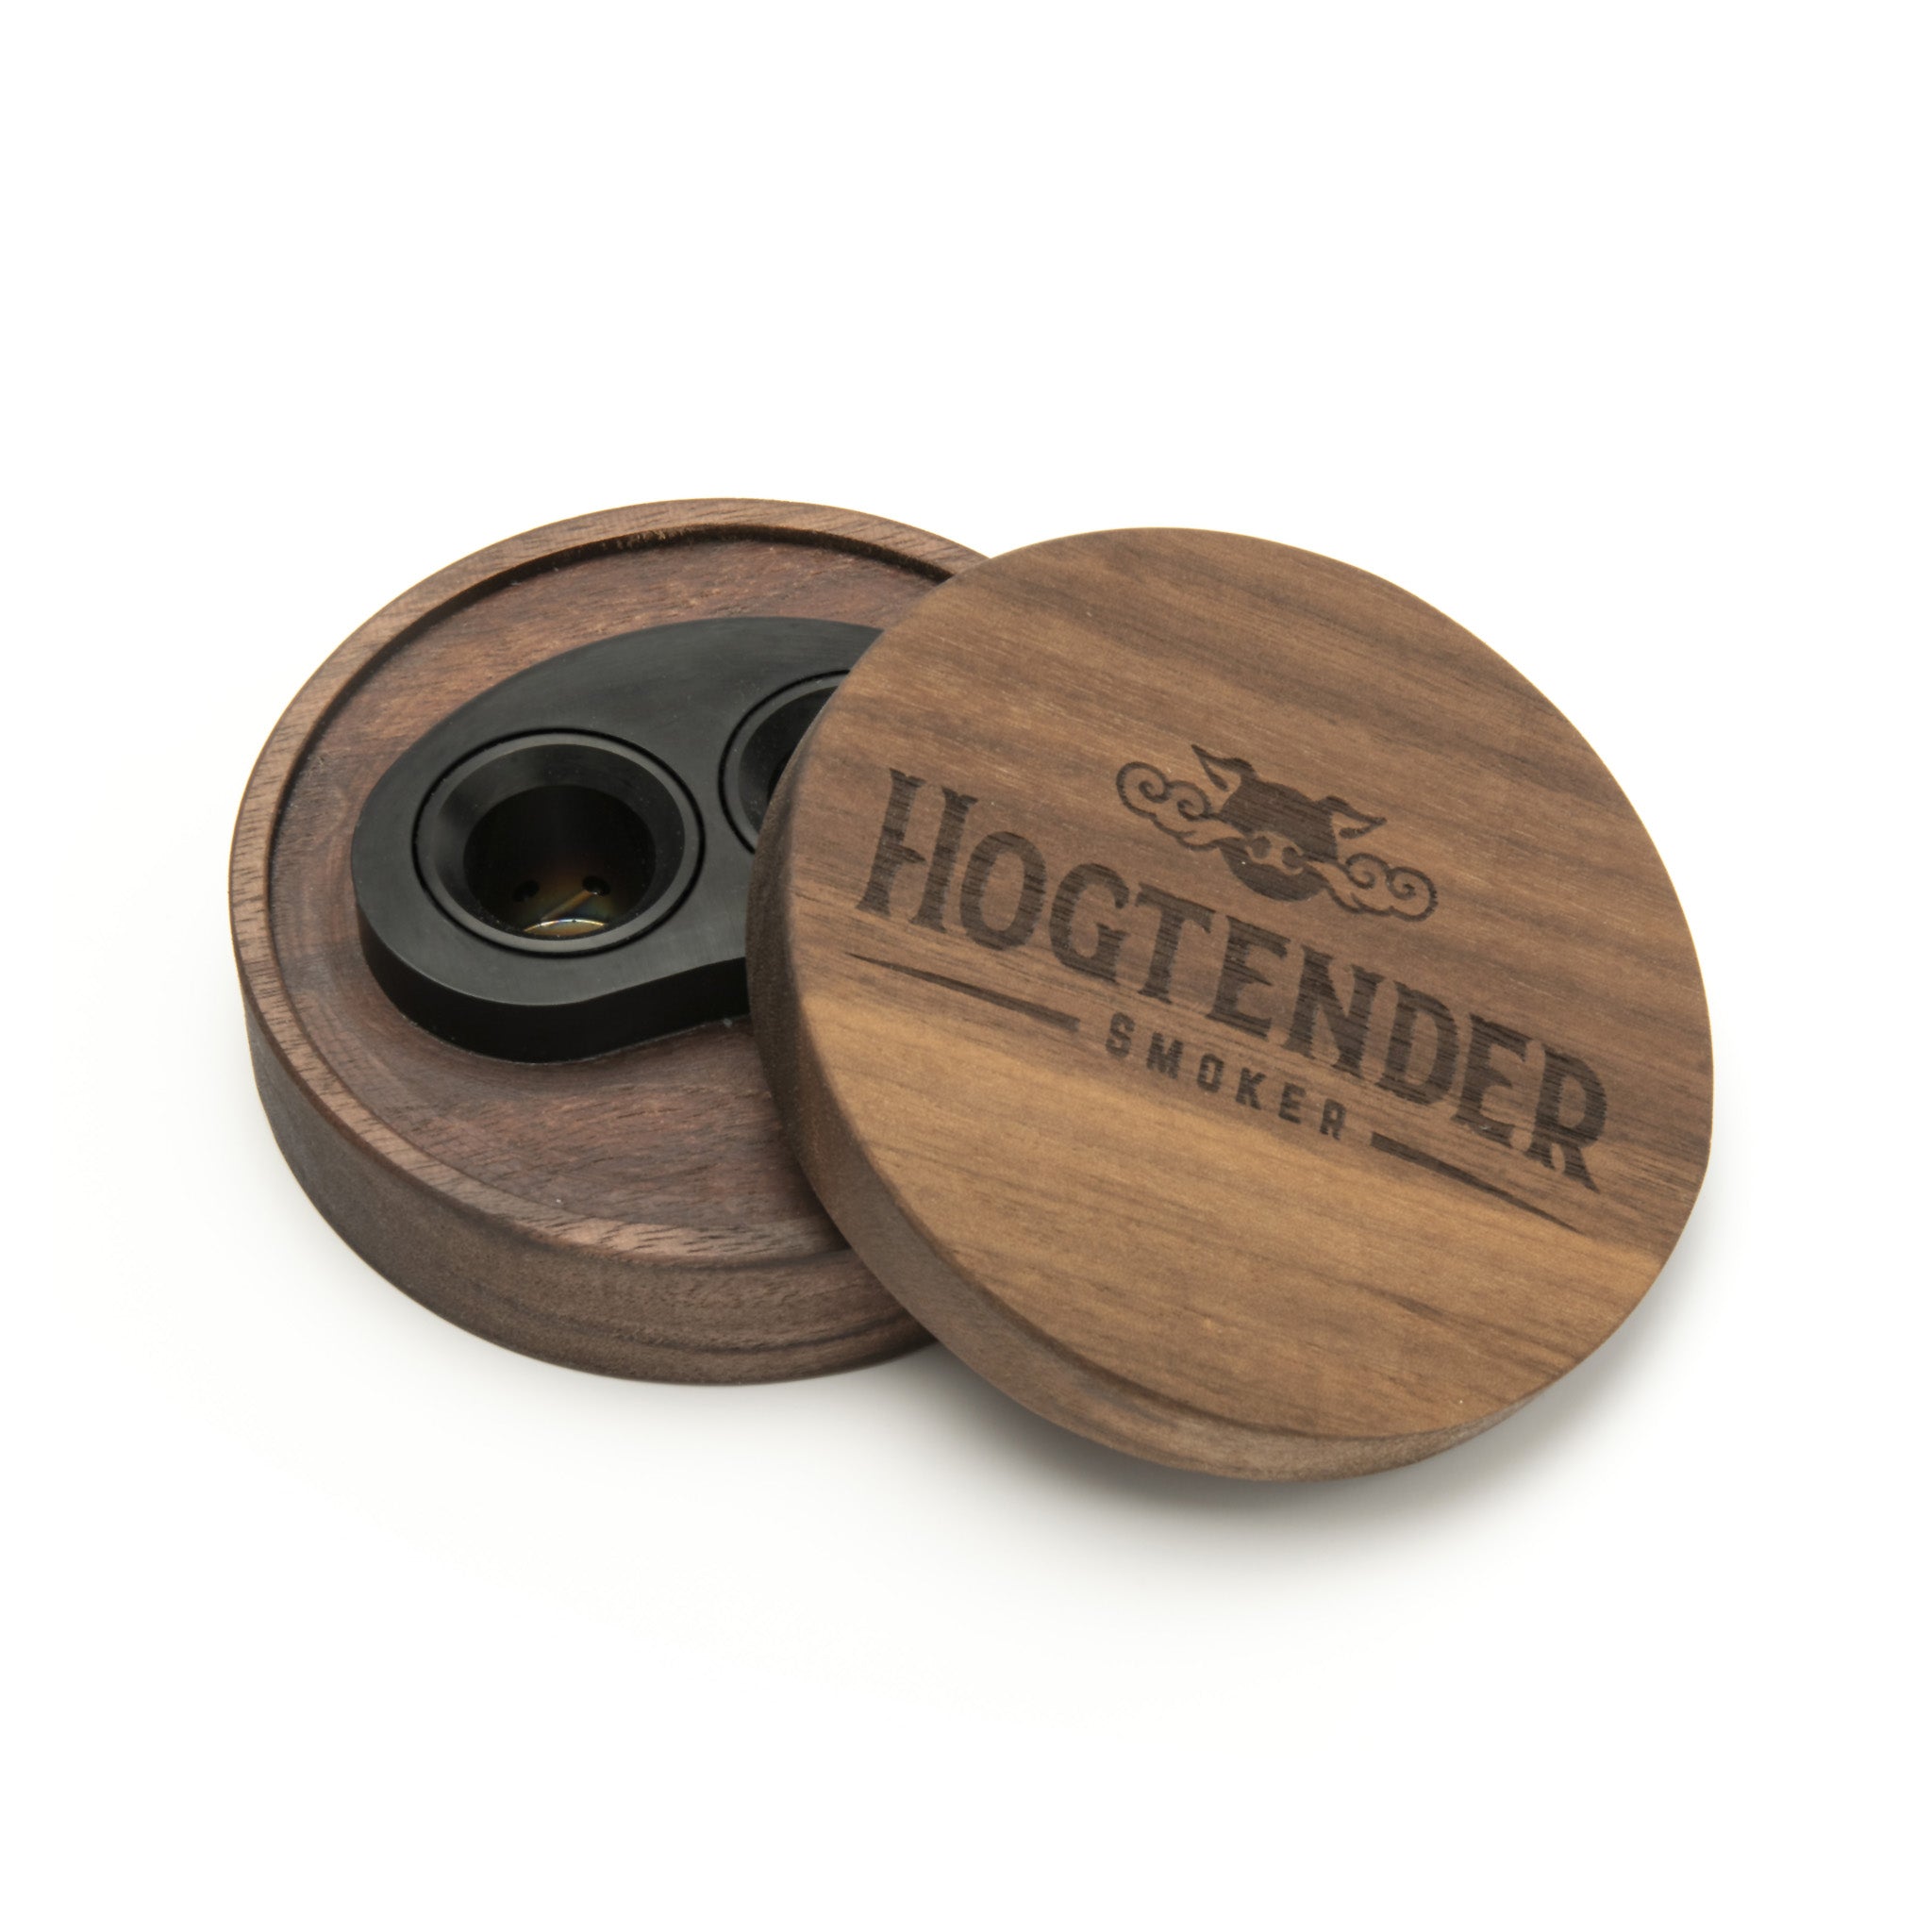 Personalized Hogtender™ Cocktail Smoker Kit - Blind Pig Drinking Co.